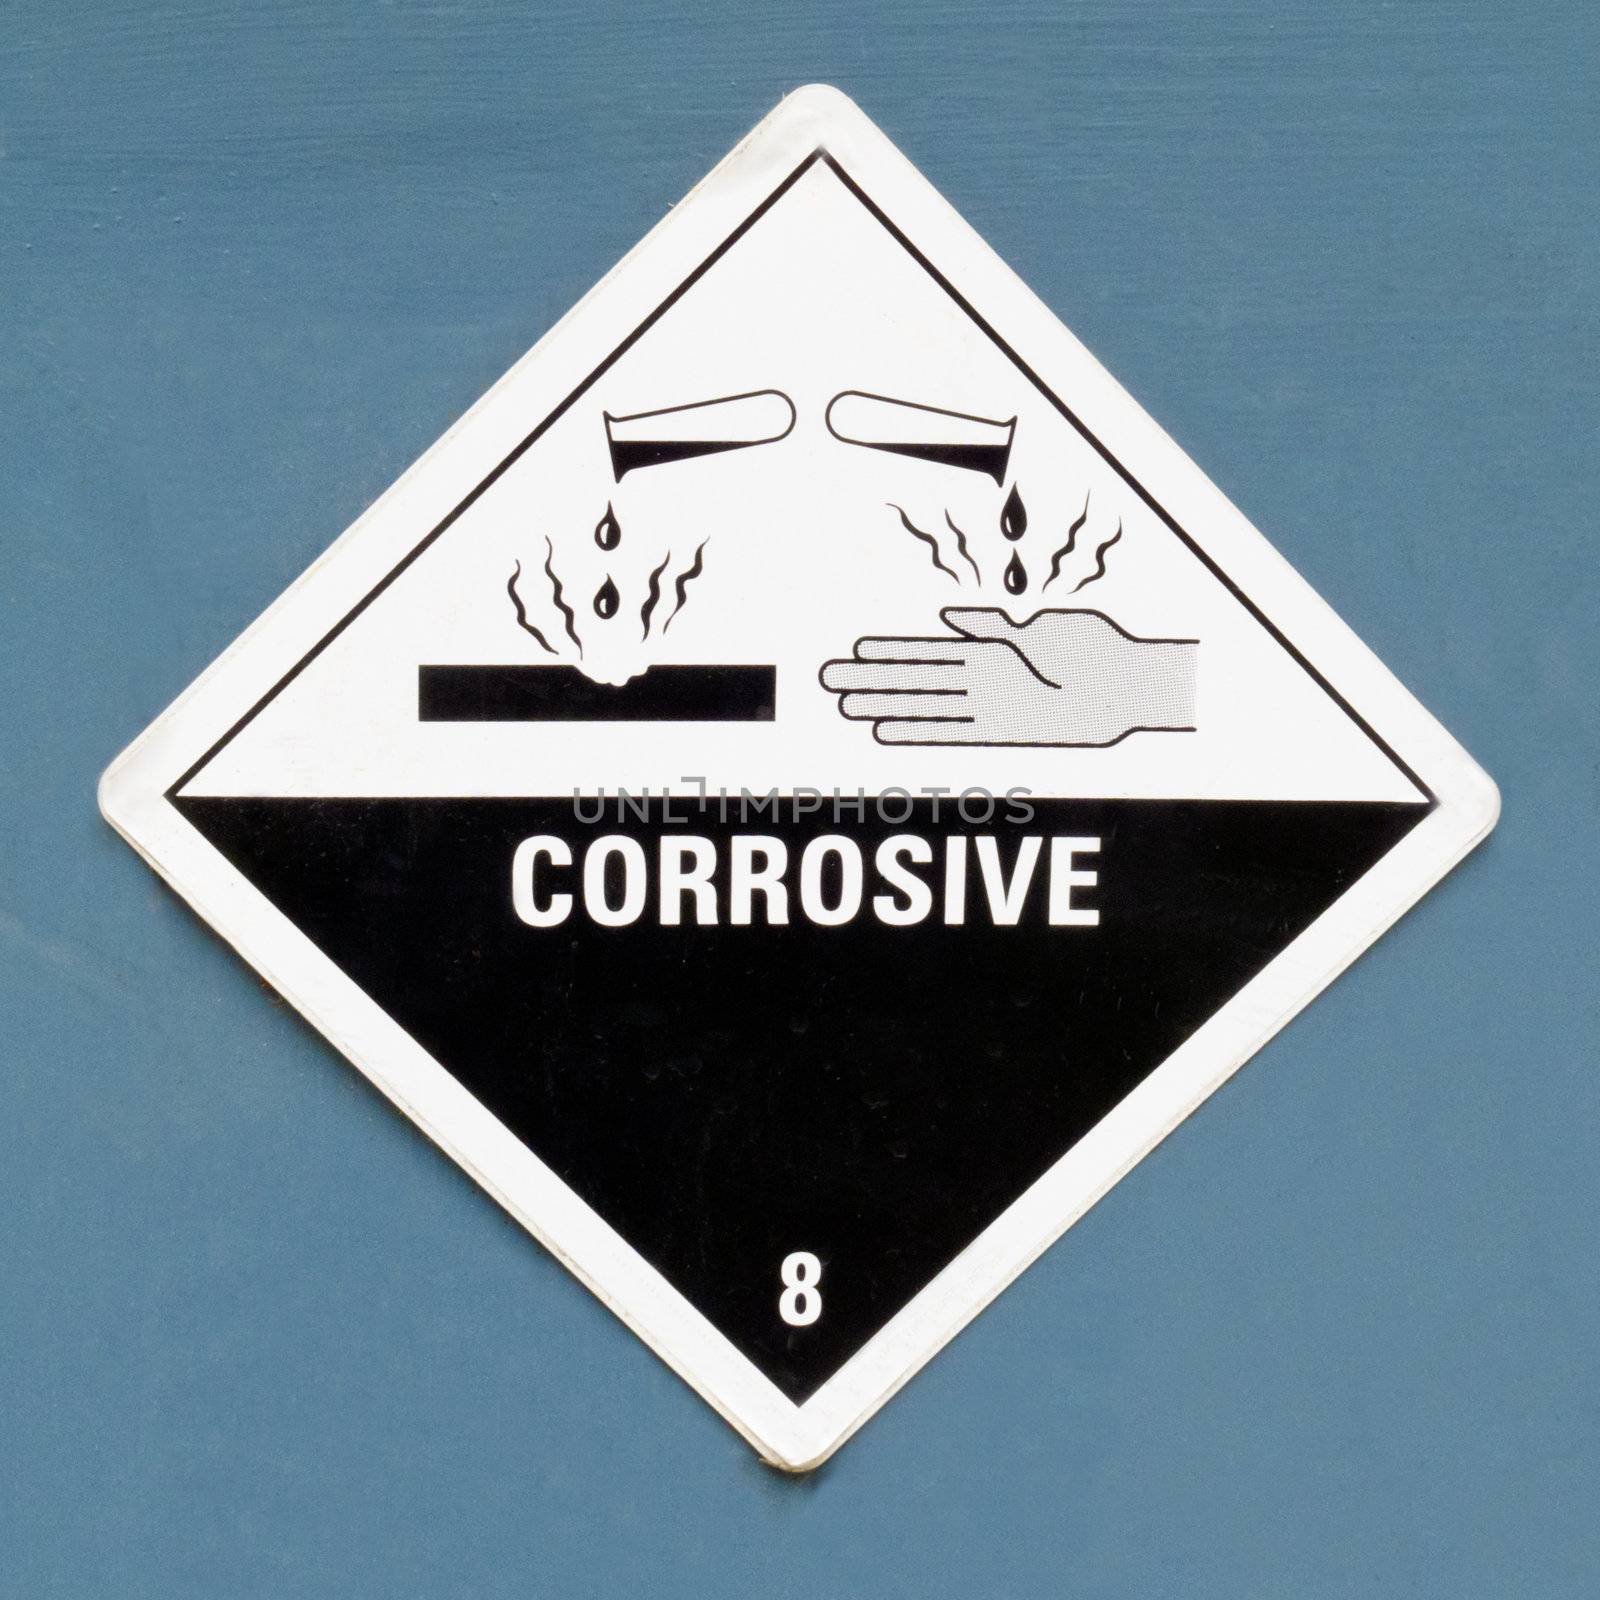 Corrosive hazard symbol warning sign on blue by PiLens